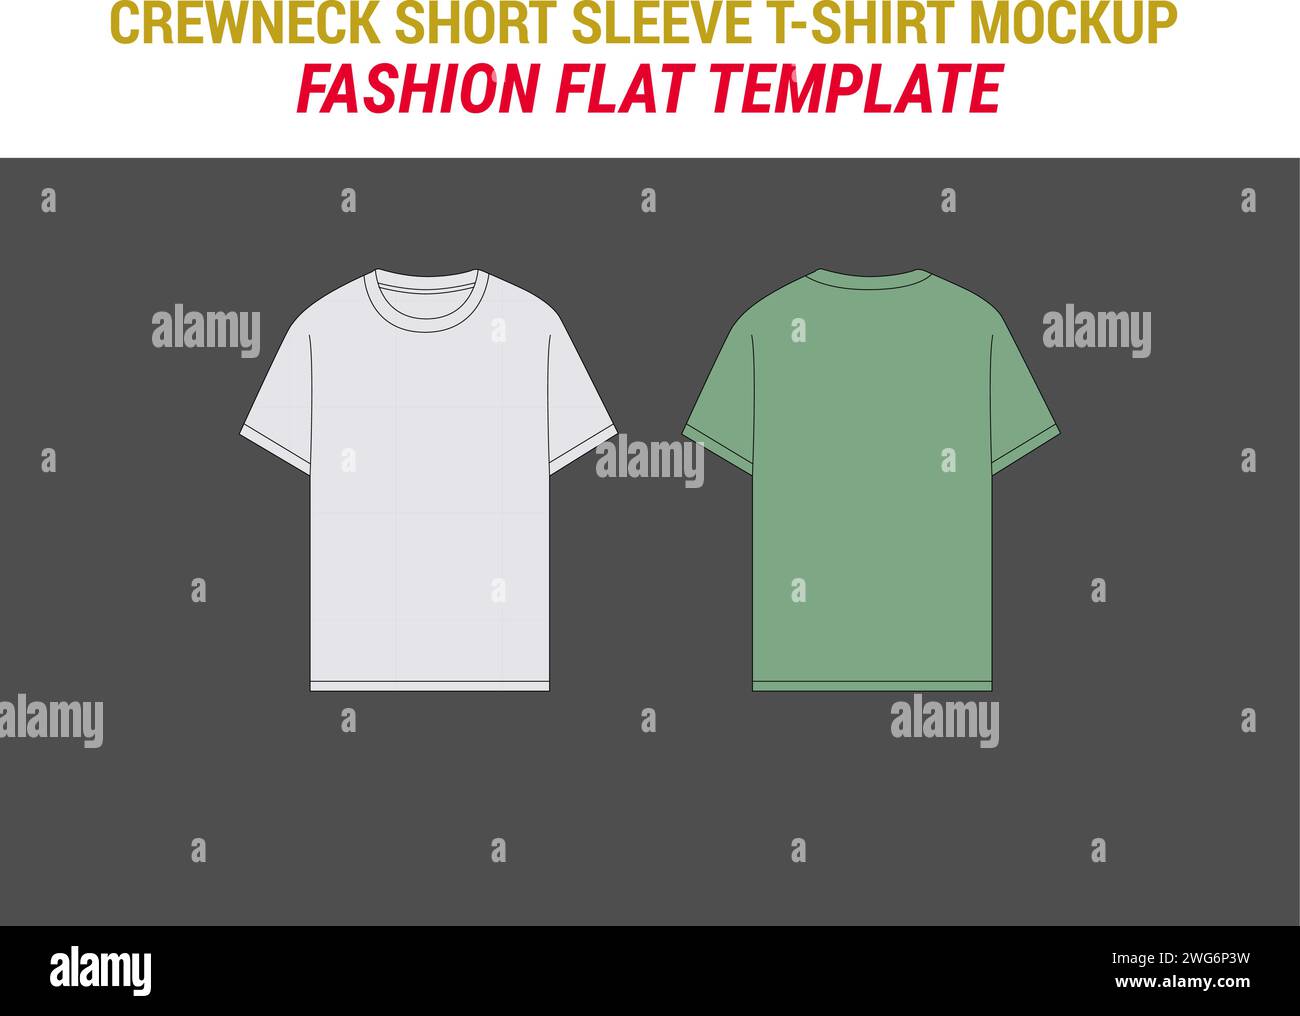 Rundhalsausschnitt Kurzarm Vektor Mockup T-Shirt Kurzarm Mode Illustration Rundhalsausschnitt T-Shirt Vektor Mockup Flats CAD Mockup Stock Vektor